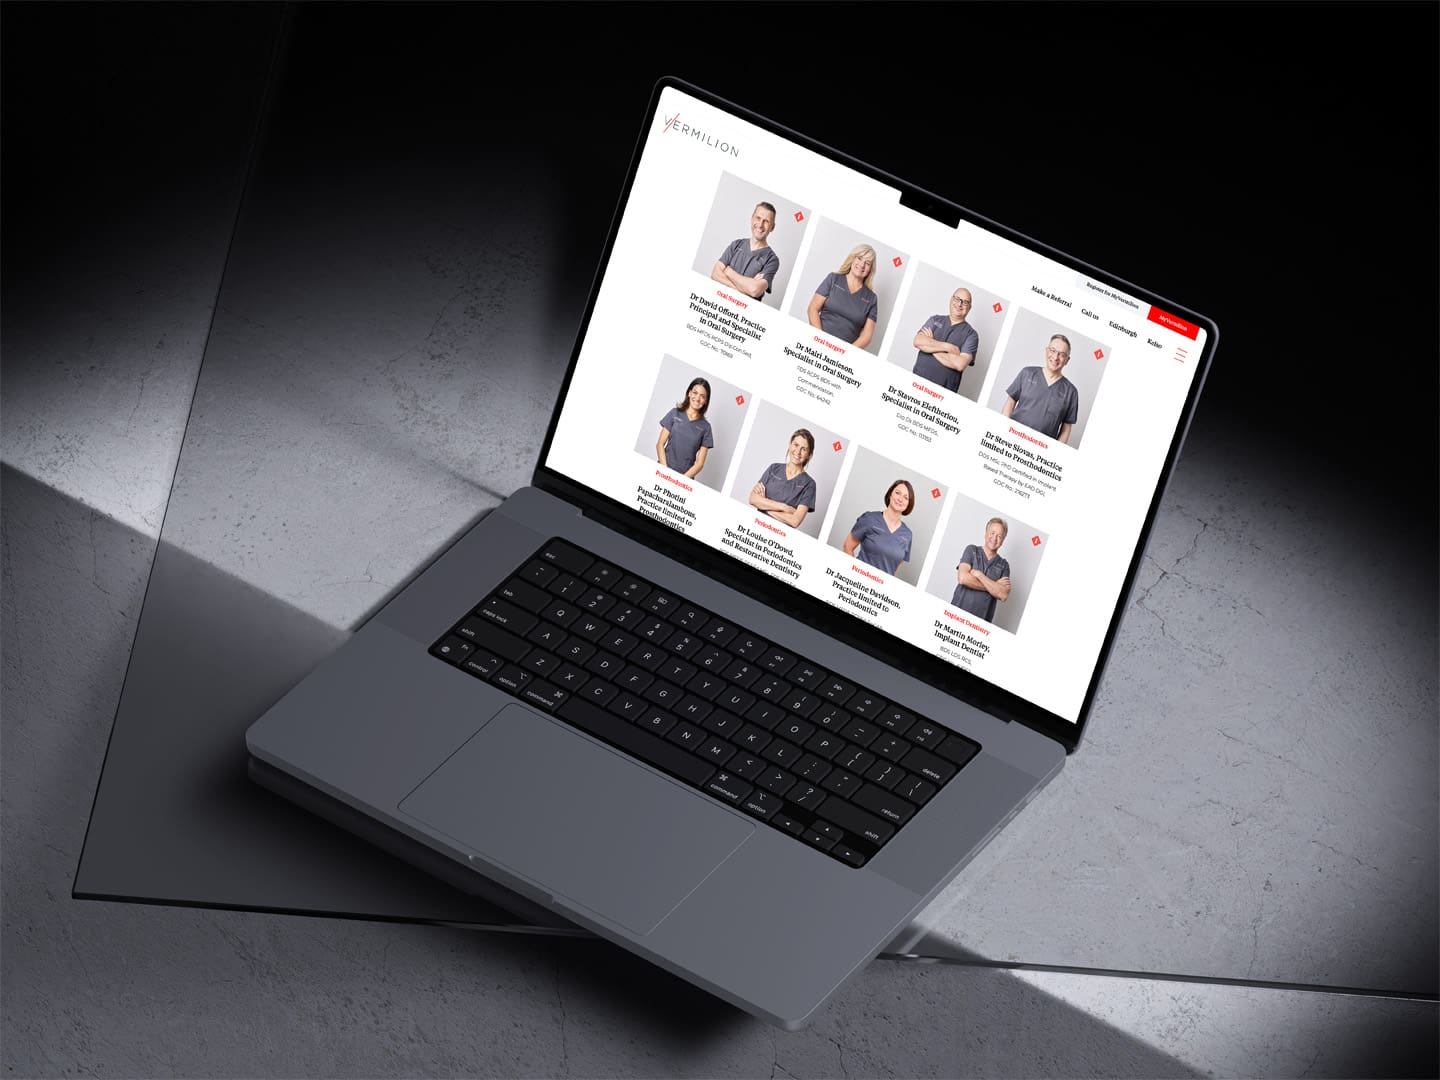 MacBook Pro laptop illustrating the Vermilion website Team page